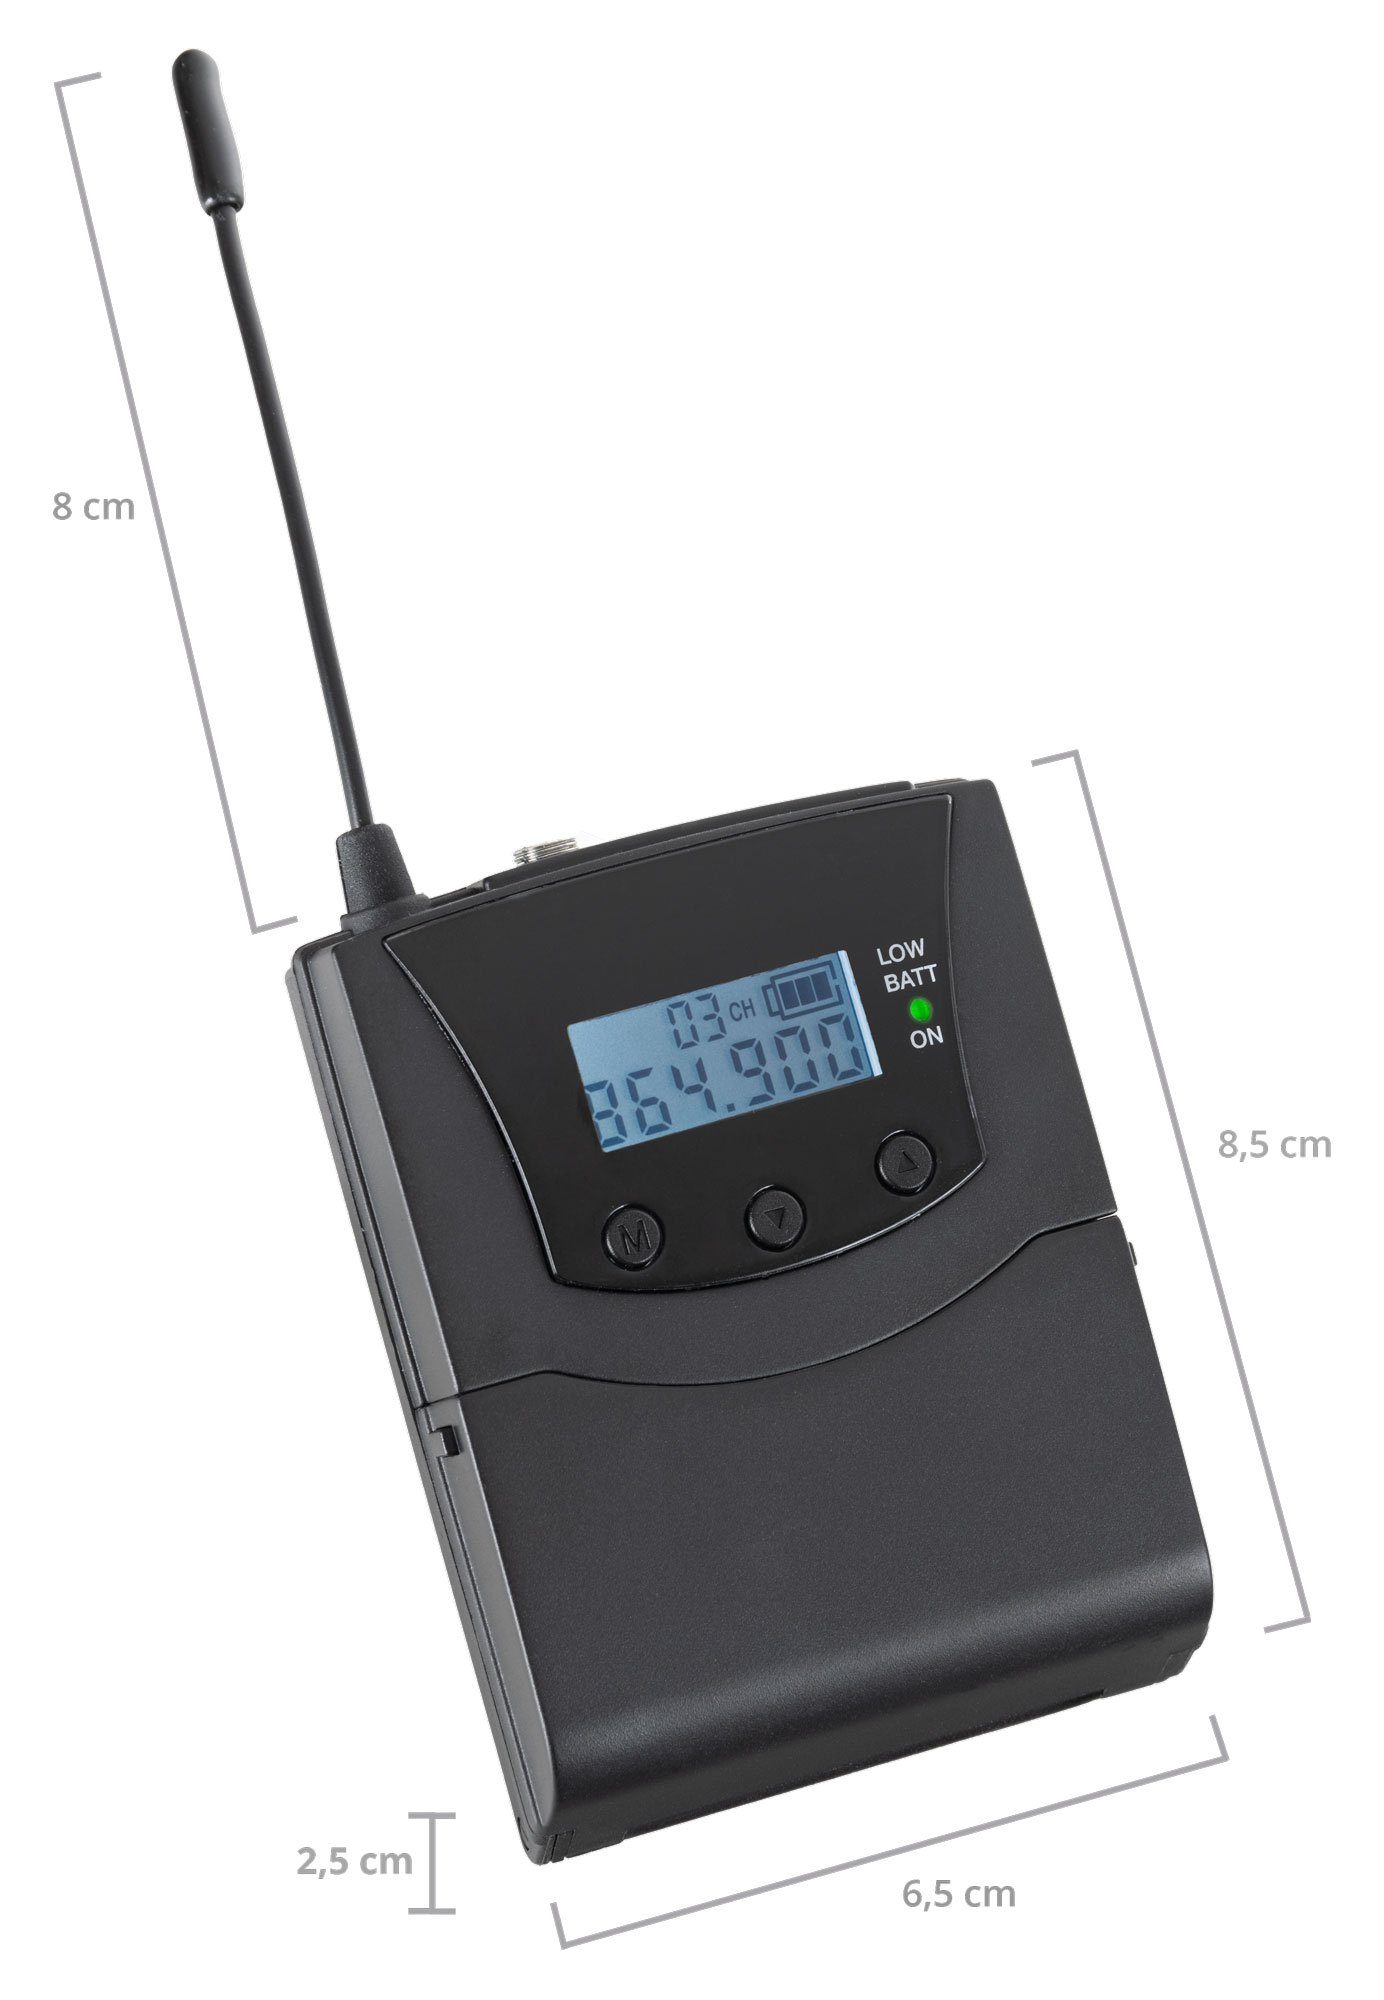 Beatfoxx Silent mit Aux- Transmitter SDT-BP30 Stereo Eingang) Mit Bodypack-Sender (Wireless Mikrofon- 3 V2 und UHF-Technik, Kanäle, Funk-Kopfhörer Guide